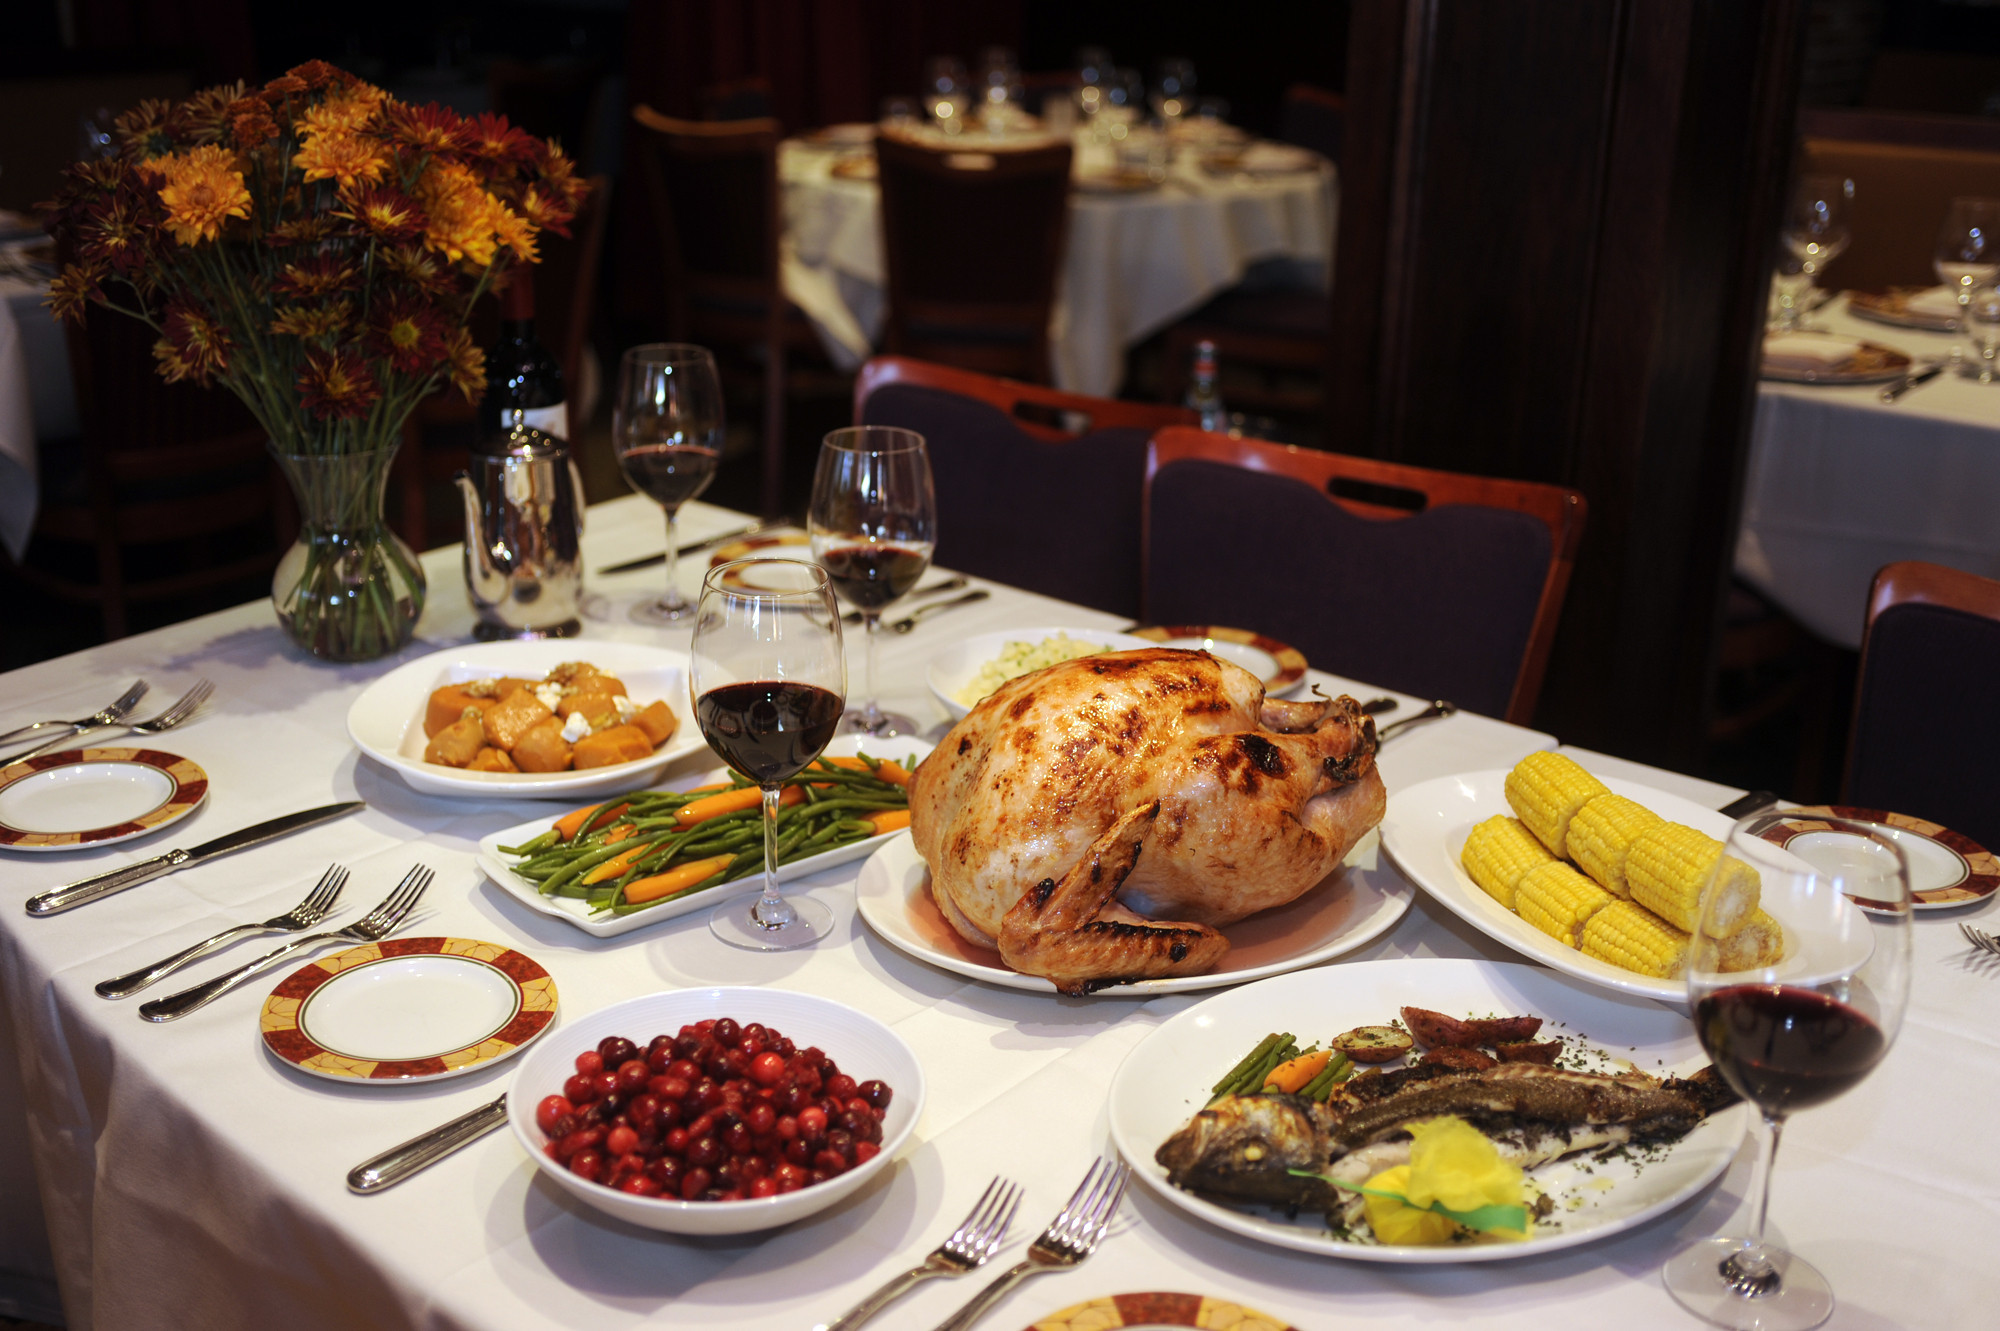 Where to dine on Thanksgiving Day in Baltimore - tribunedigital